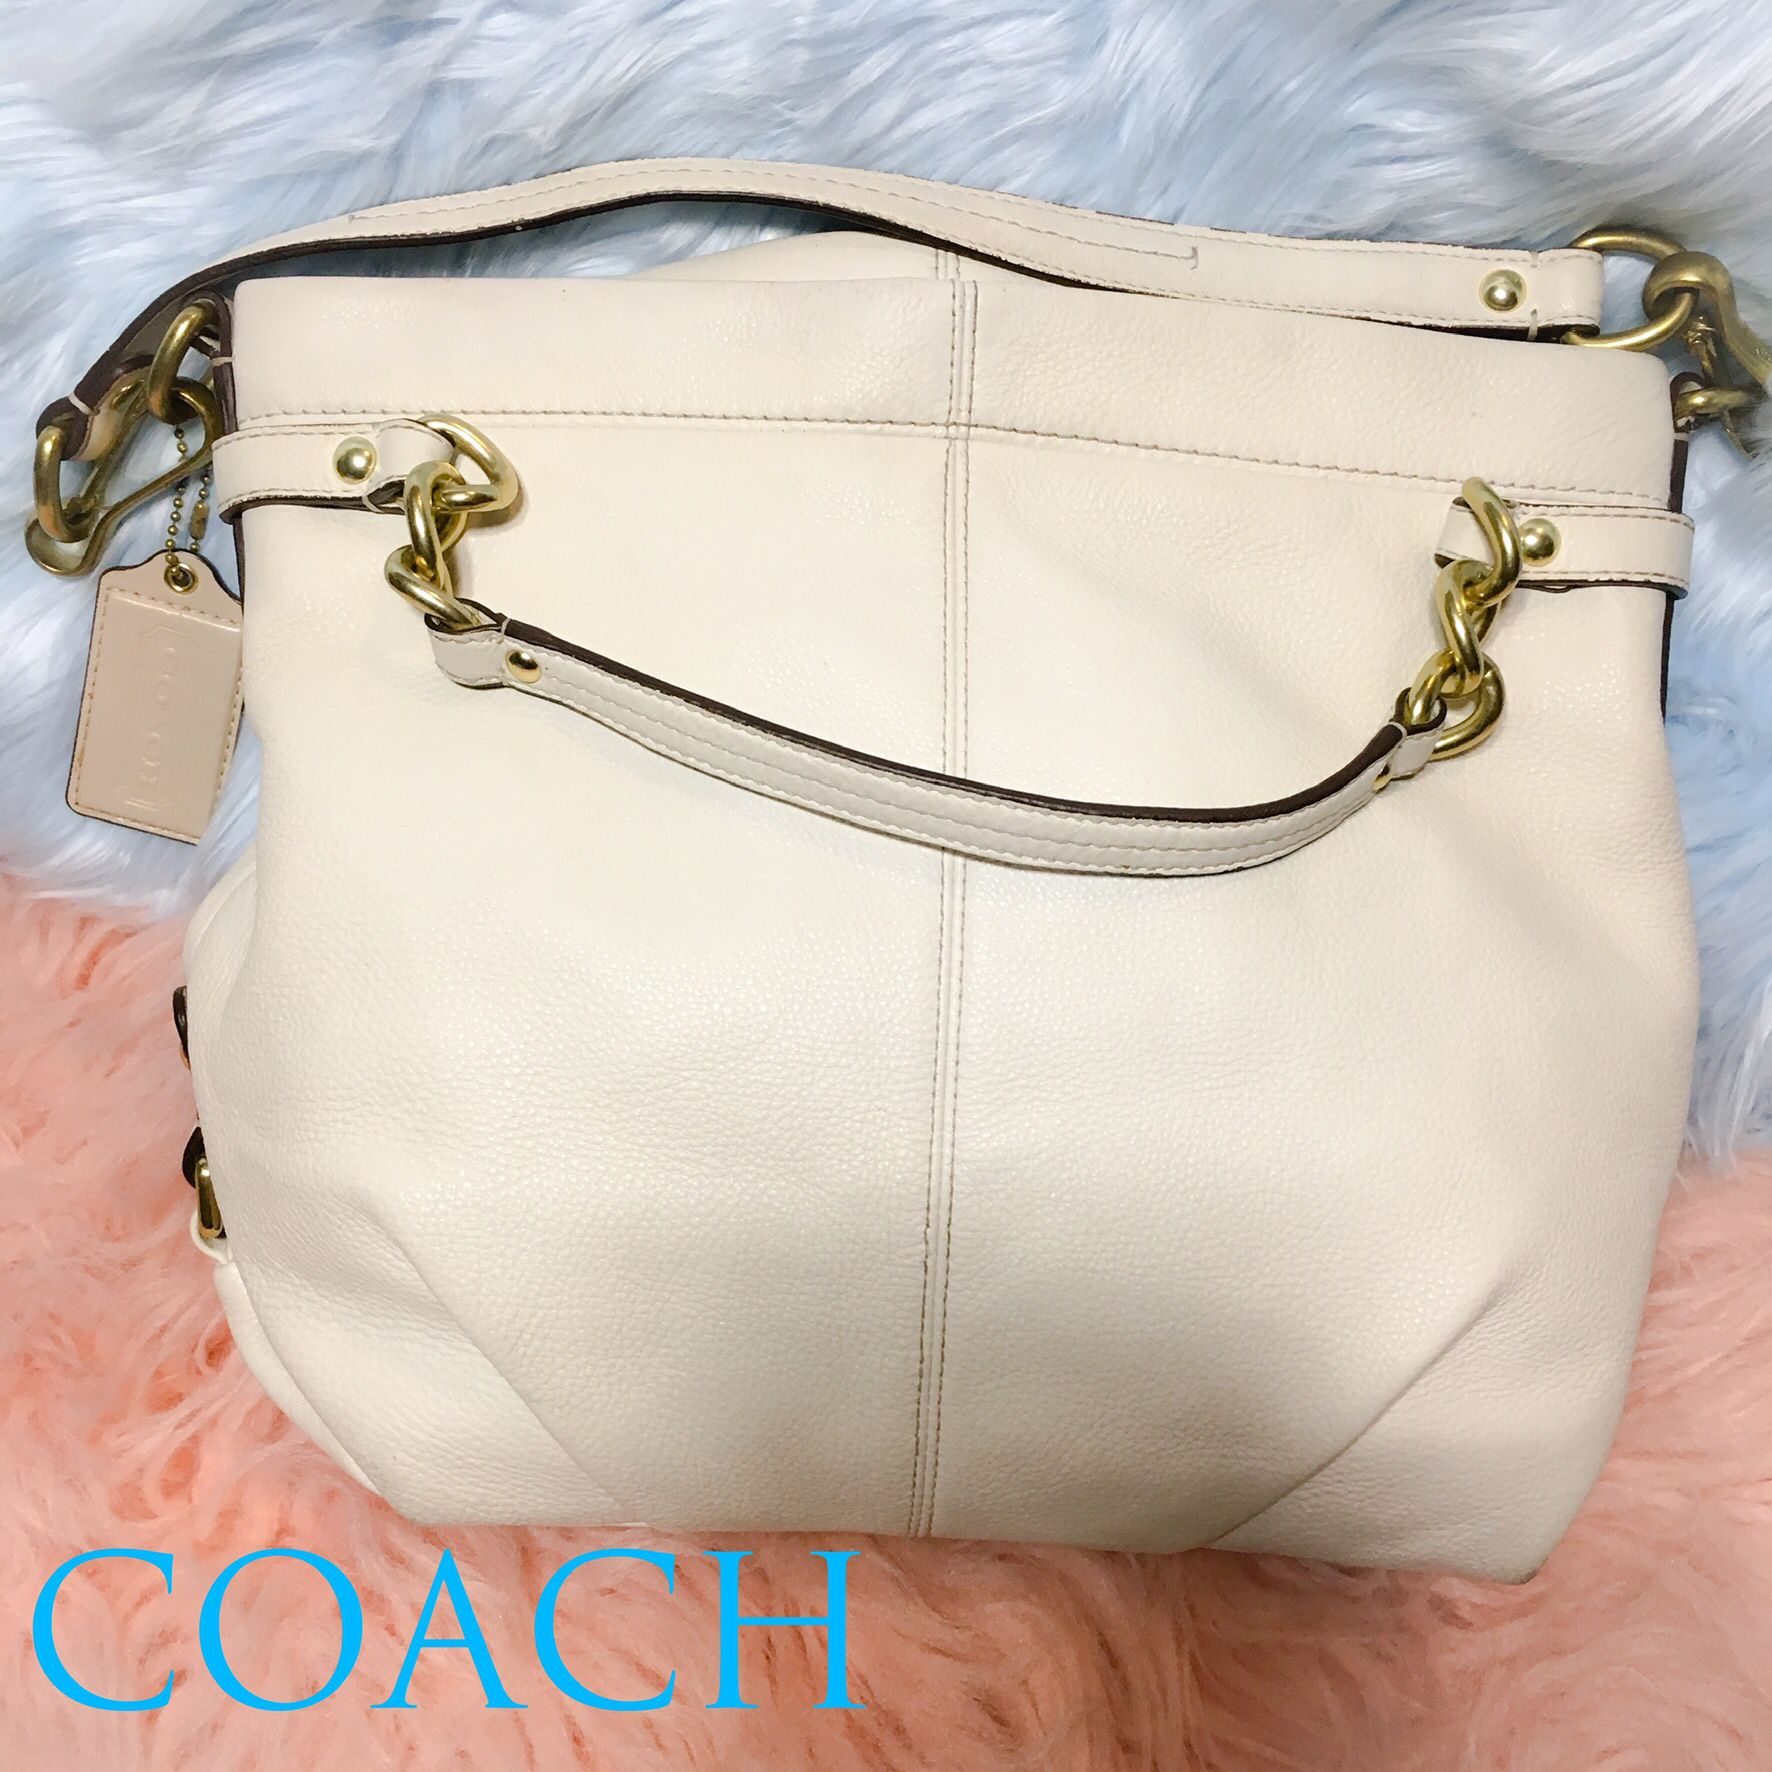 Coach white leather satchel hobo crossbody bag